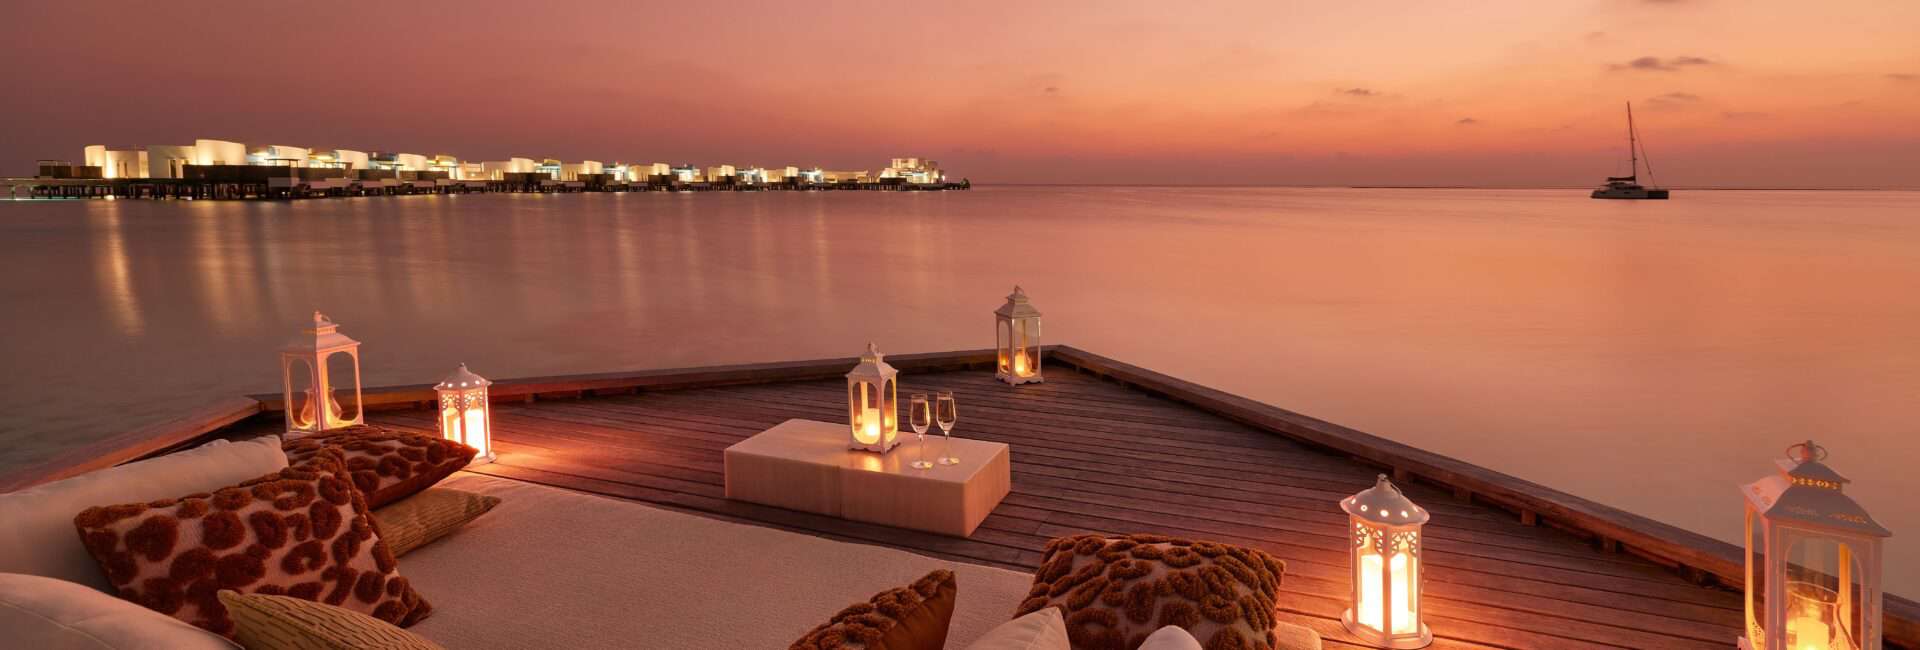 Jumeirah Maldives_High_resolution_300dpi-Jumeirah Maldives - Destination Dining Majilis